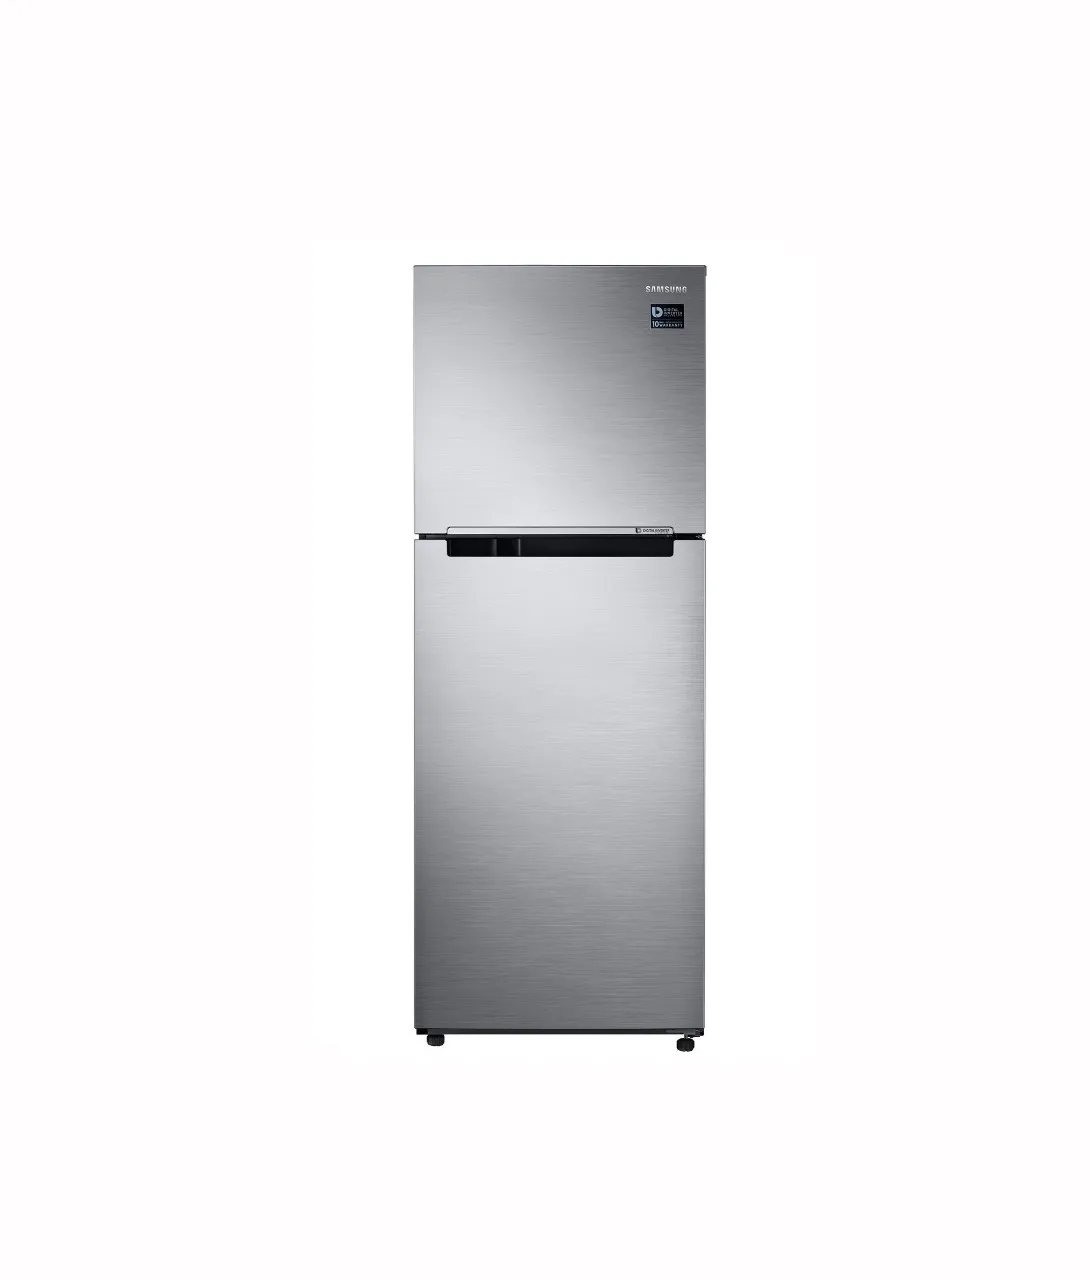 Samsung 390 Liter Top Mount Refrigerator Color Silver Model – RT39K500JS8 – 1 Year Full 10 Years Compressor Warranty.